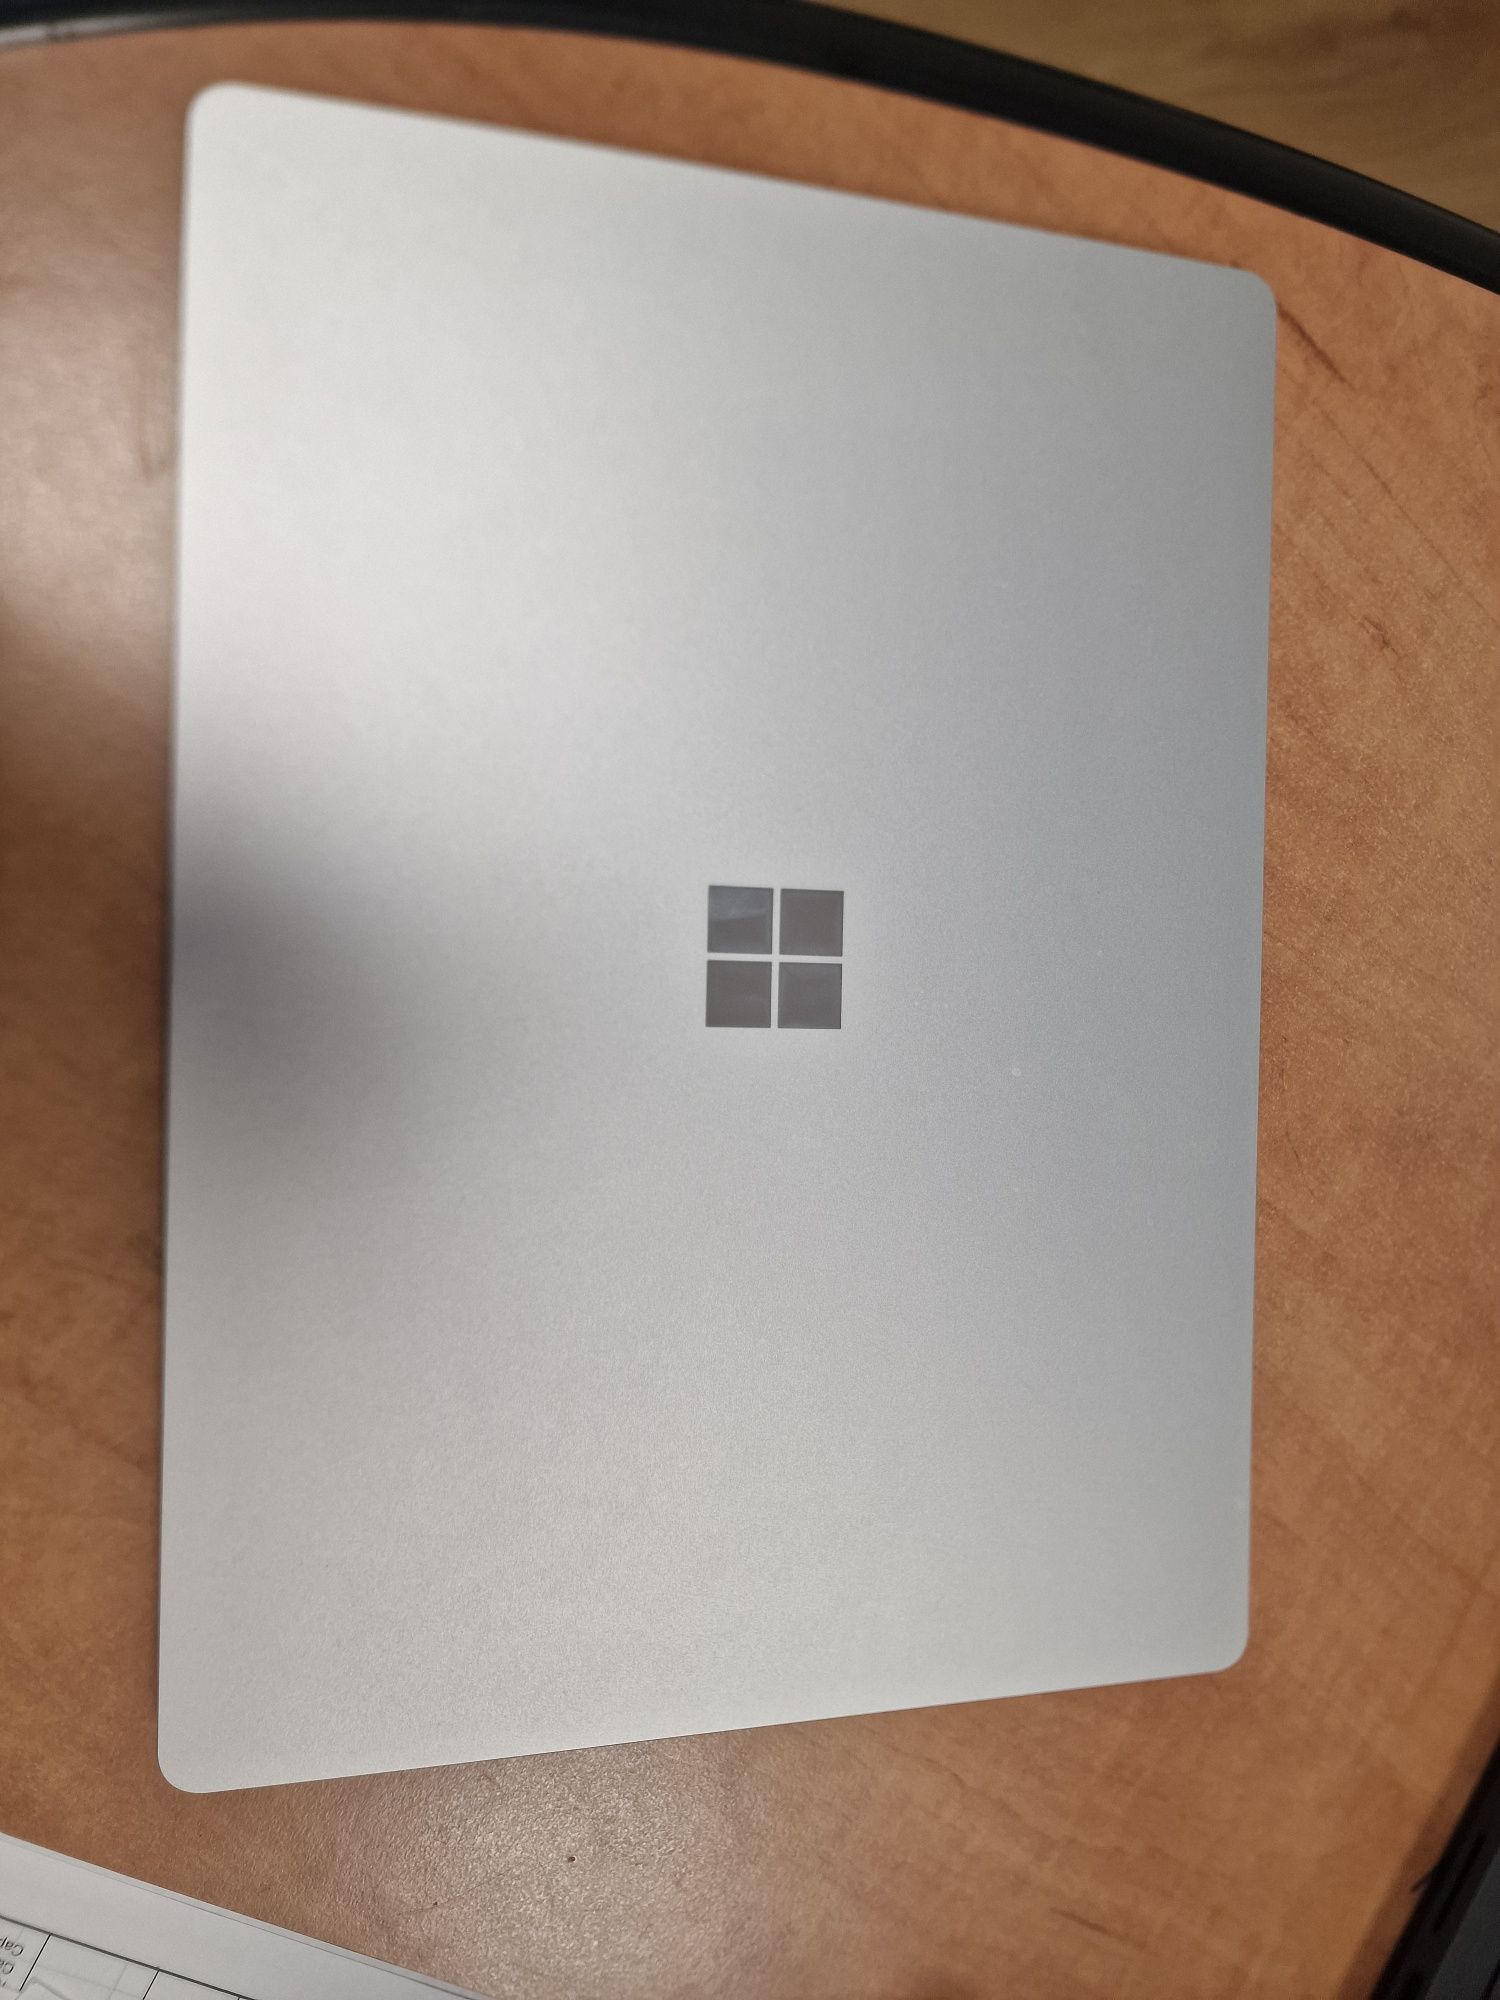 Laptop Microsoft